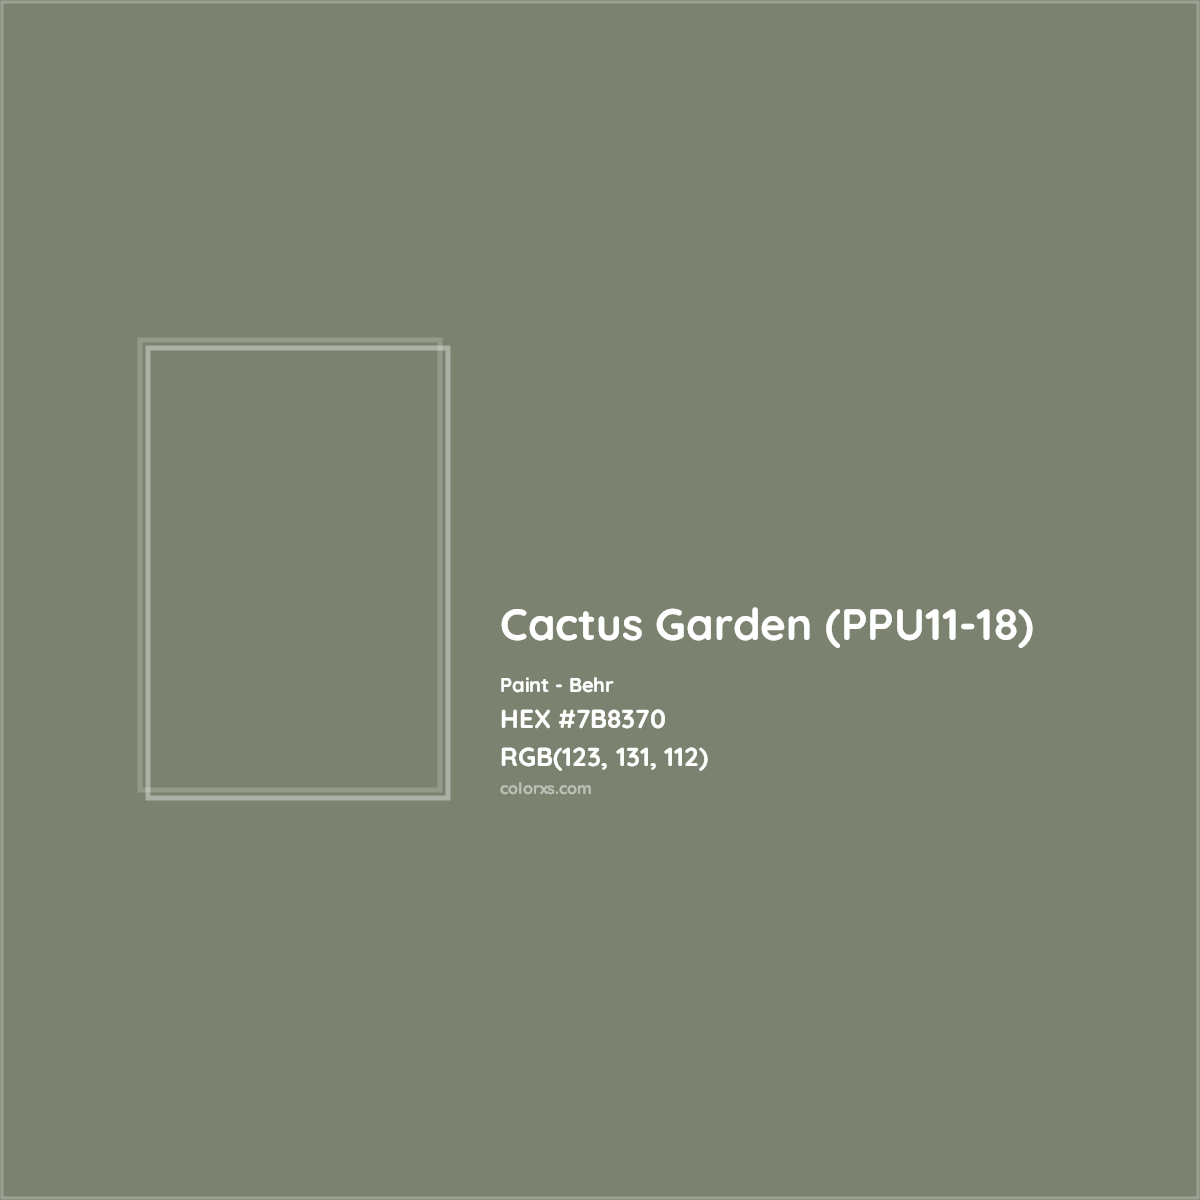 HEX #7B8370 Cactus Garden (PPU11-18) Paint Behr - Color Code